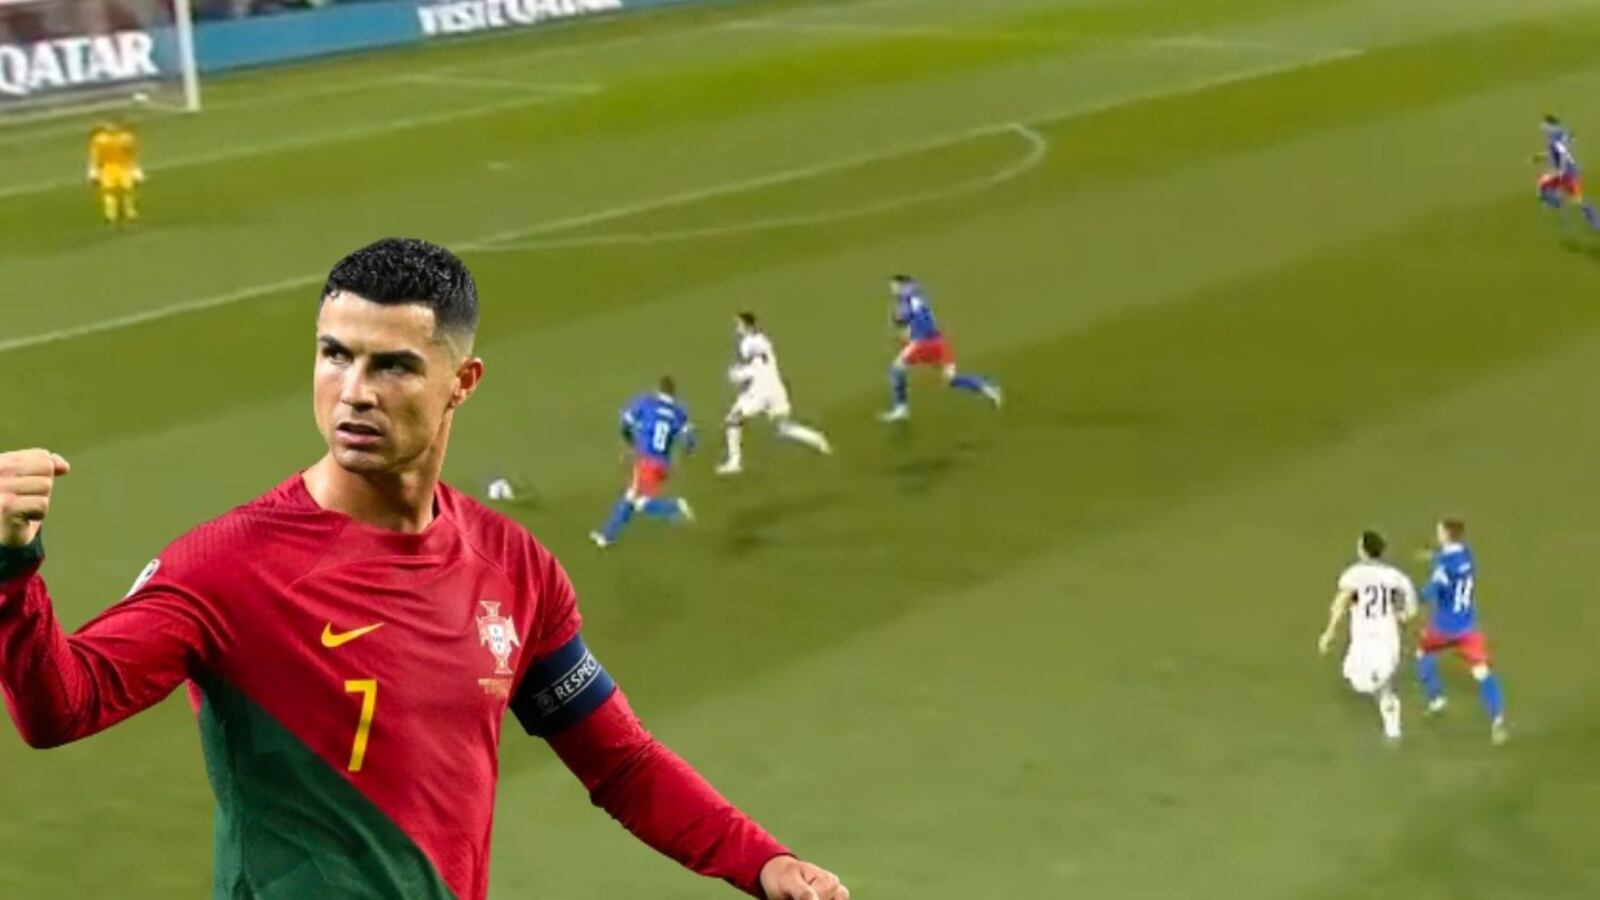 (VIDEO) El gran gol de Cristiano Ronaldo en el Liechtenstein vs Portugal